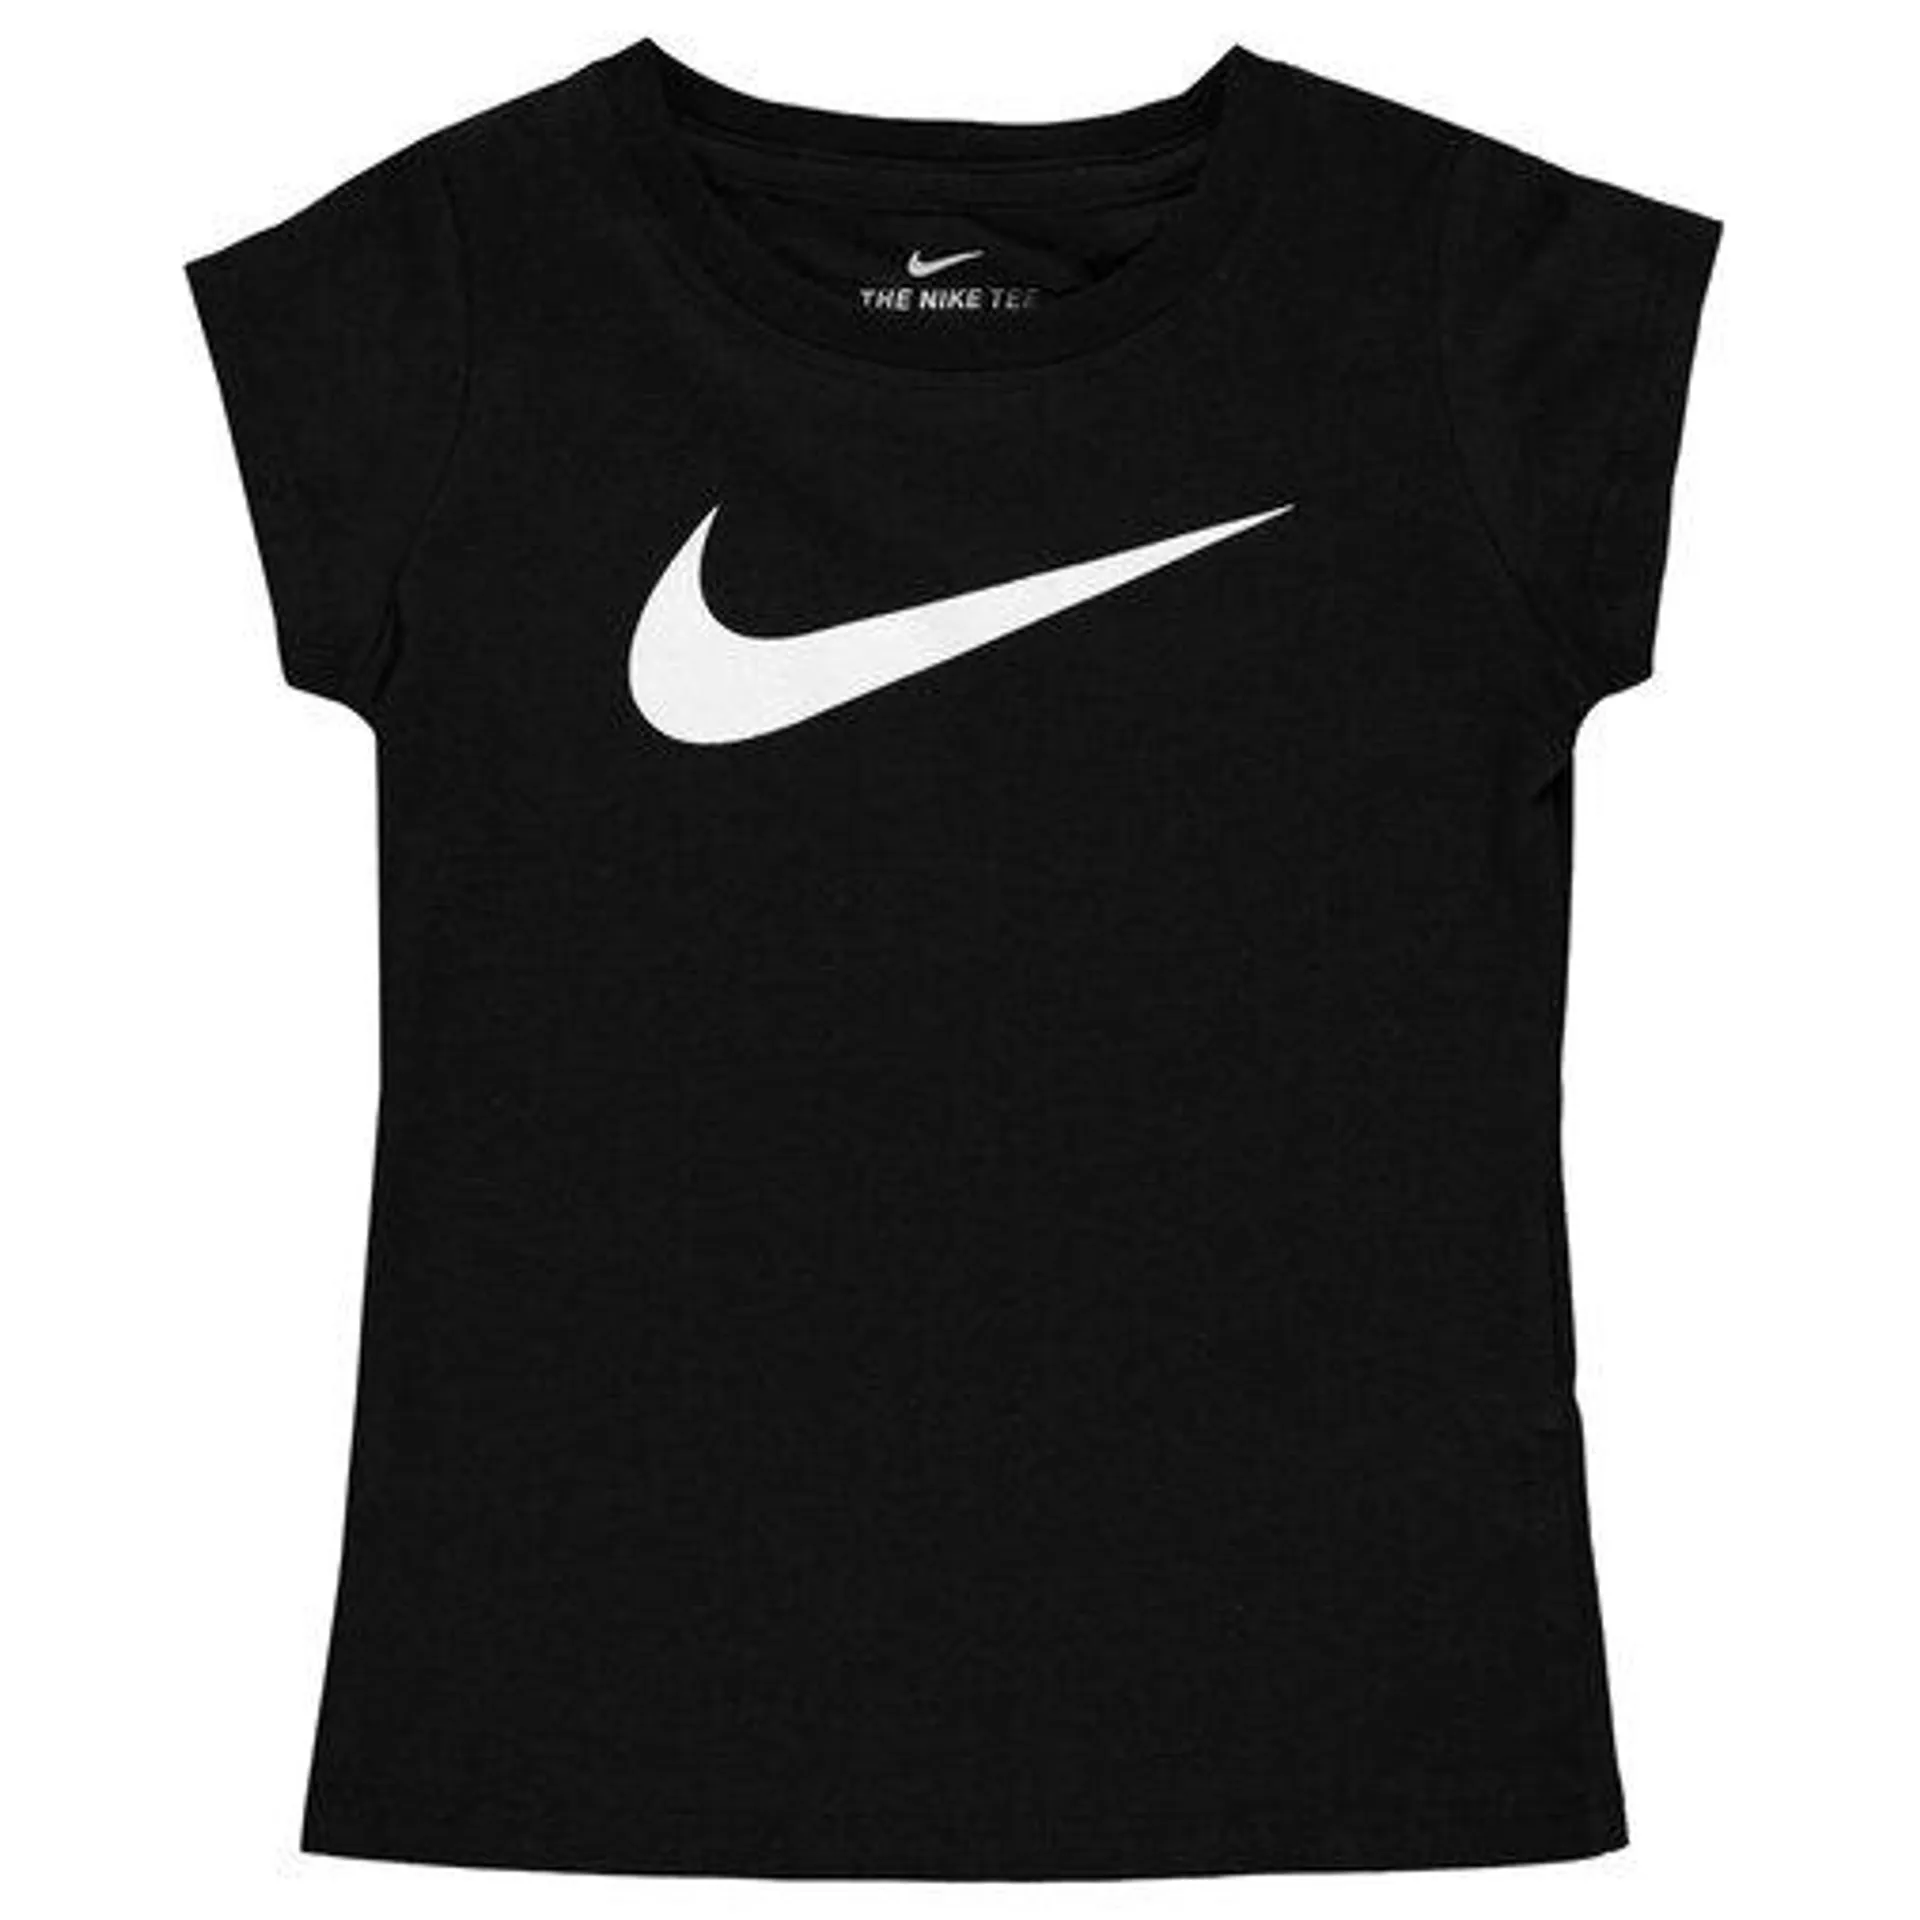 Nike Swoosh T Shirt Infant Girls